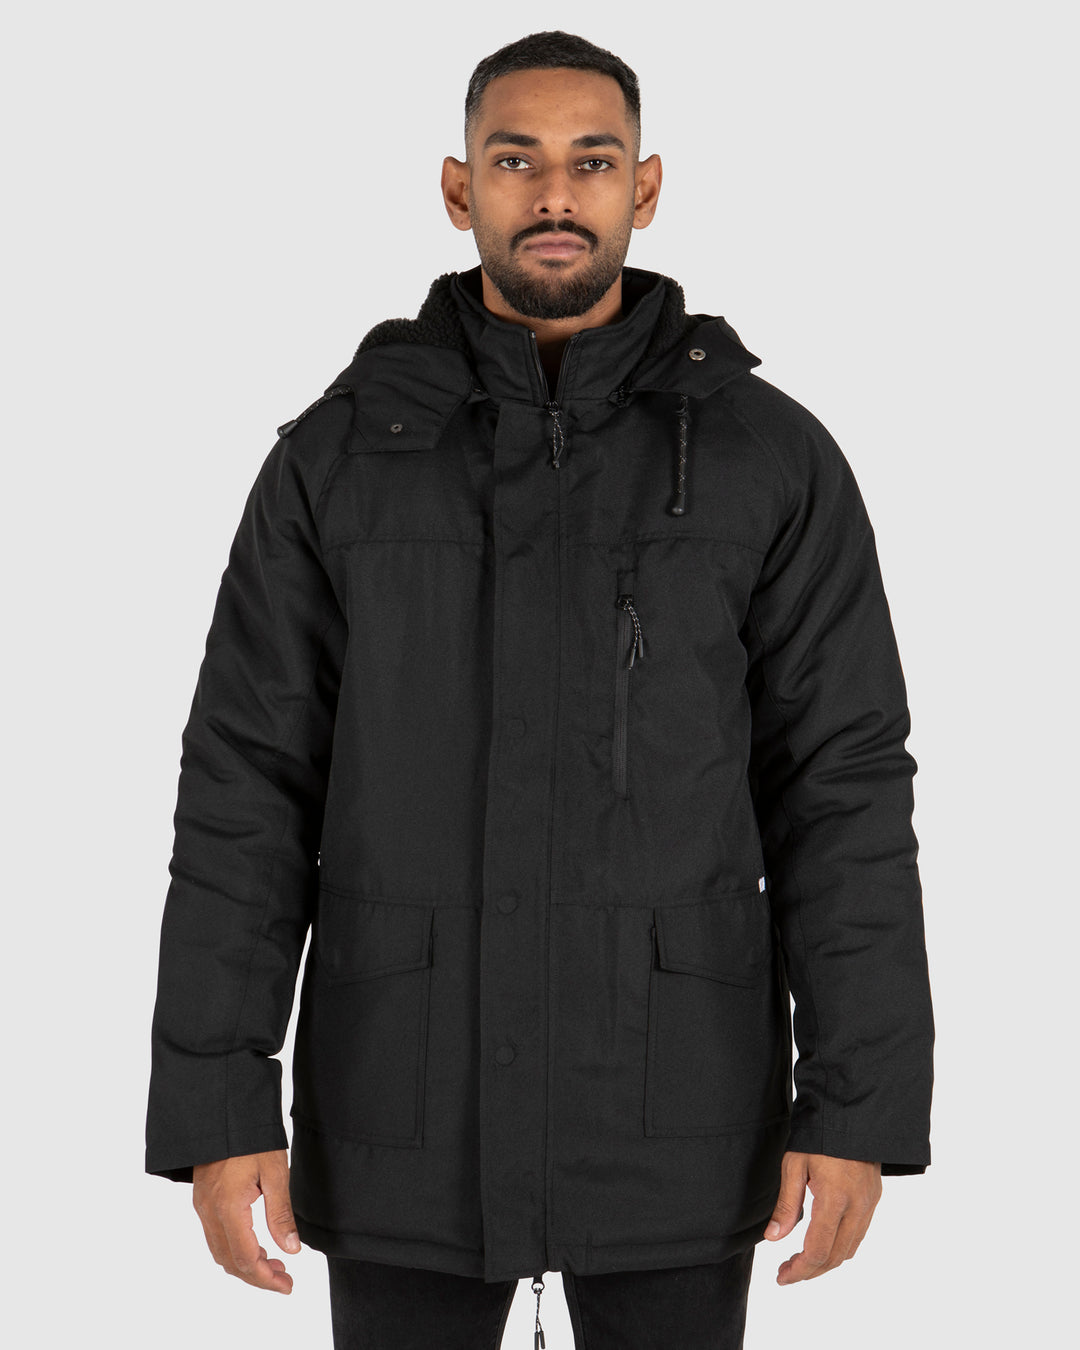 UNIT Mens Eternal Weather Resistant Jacket